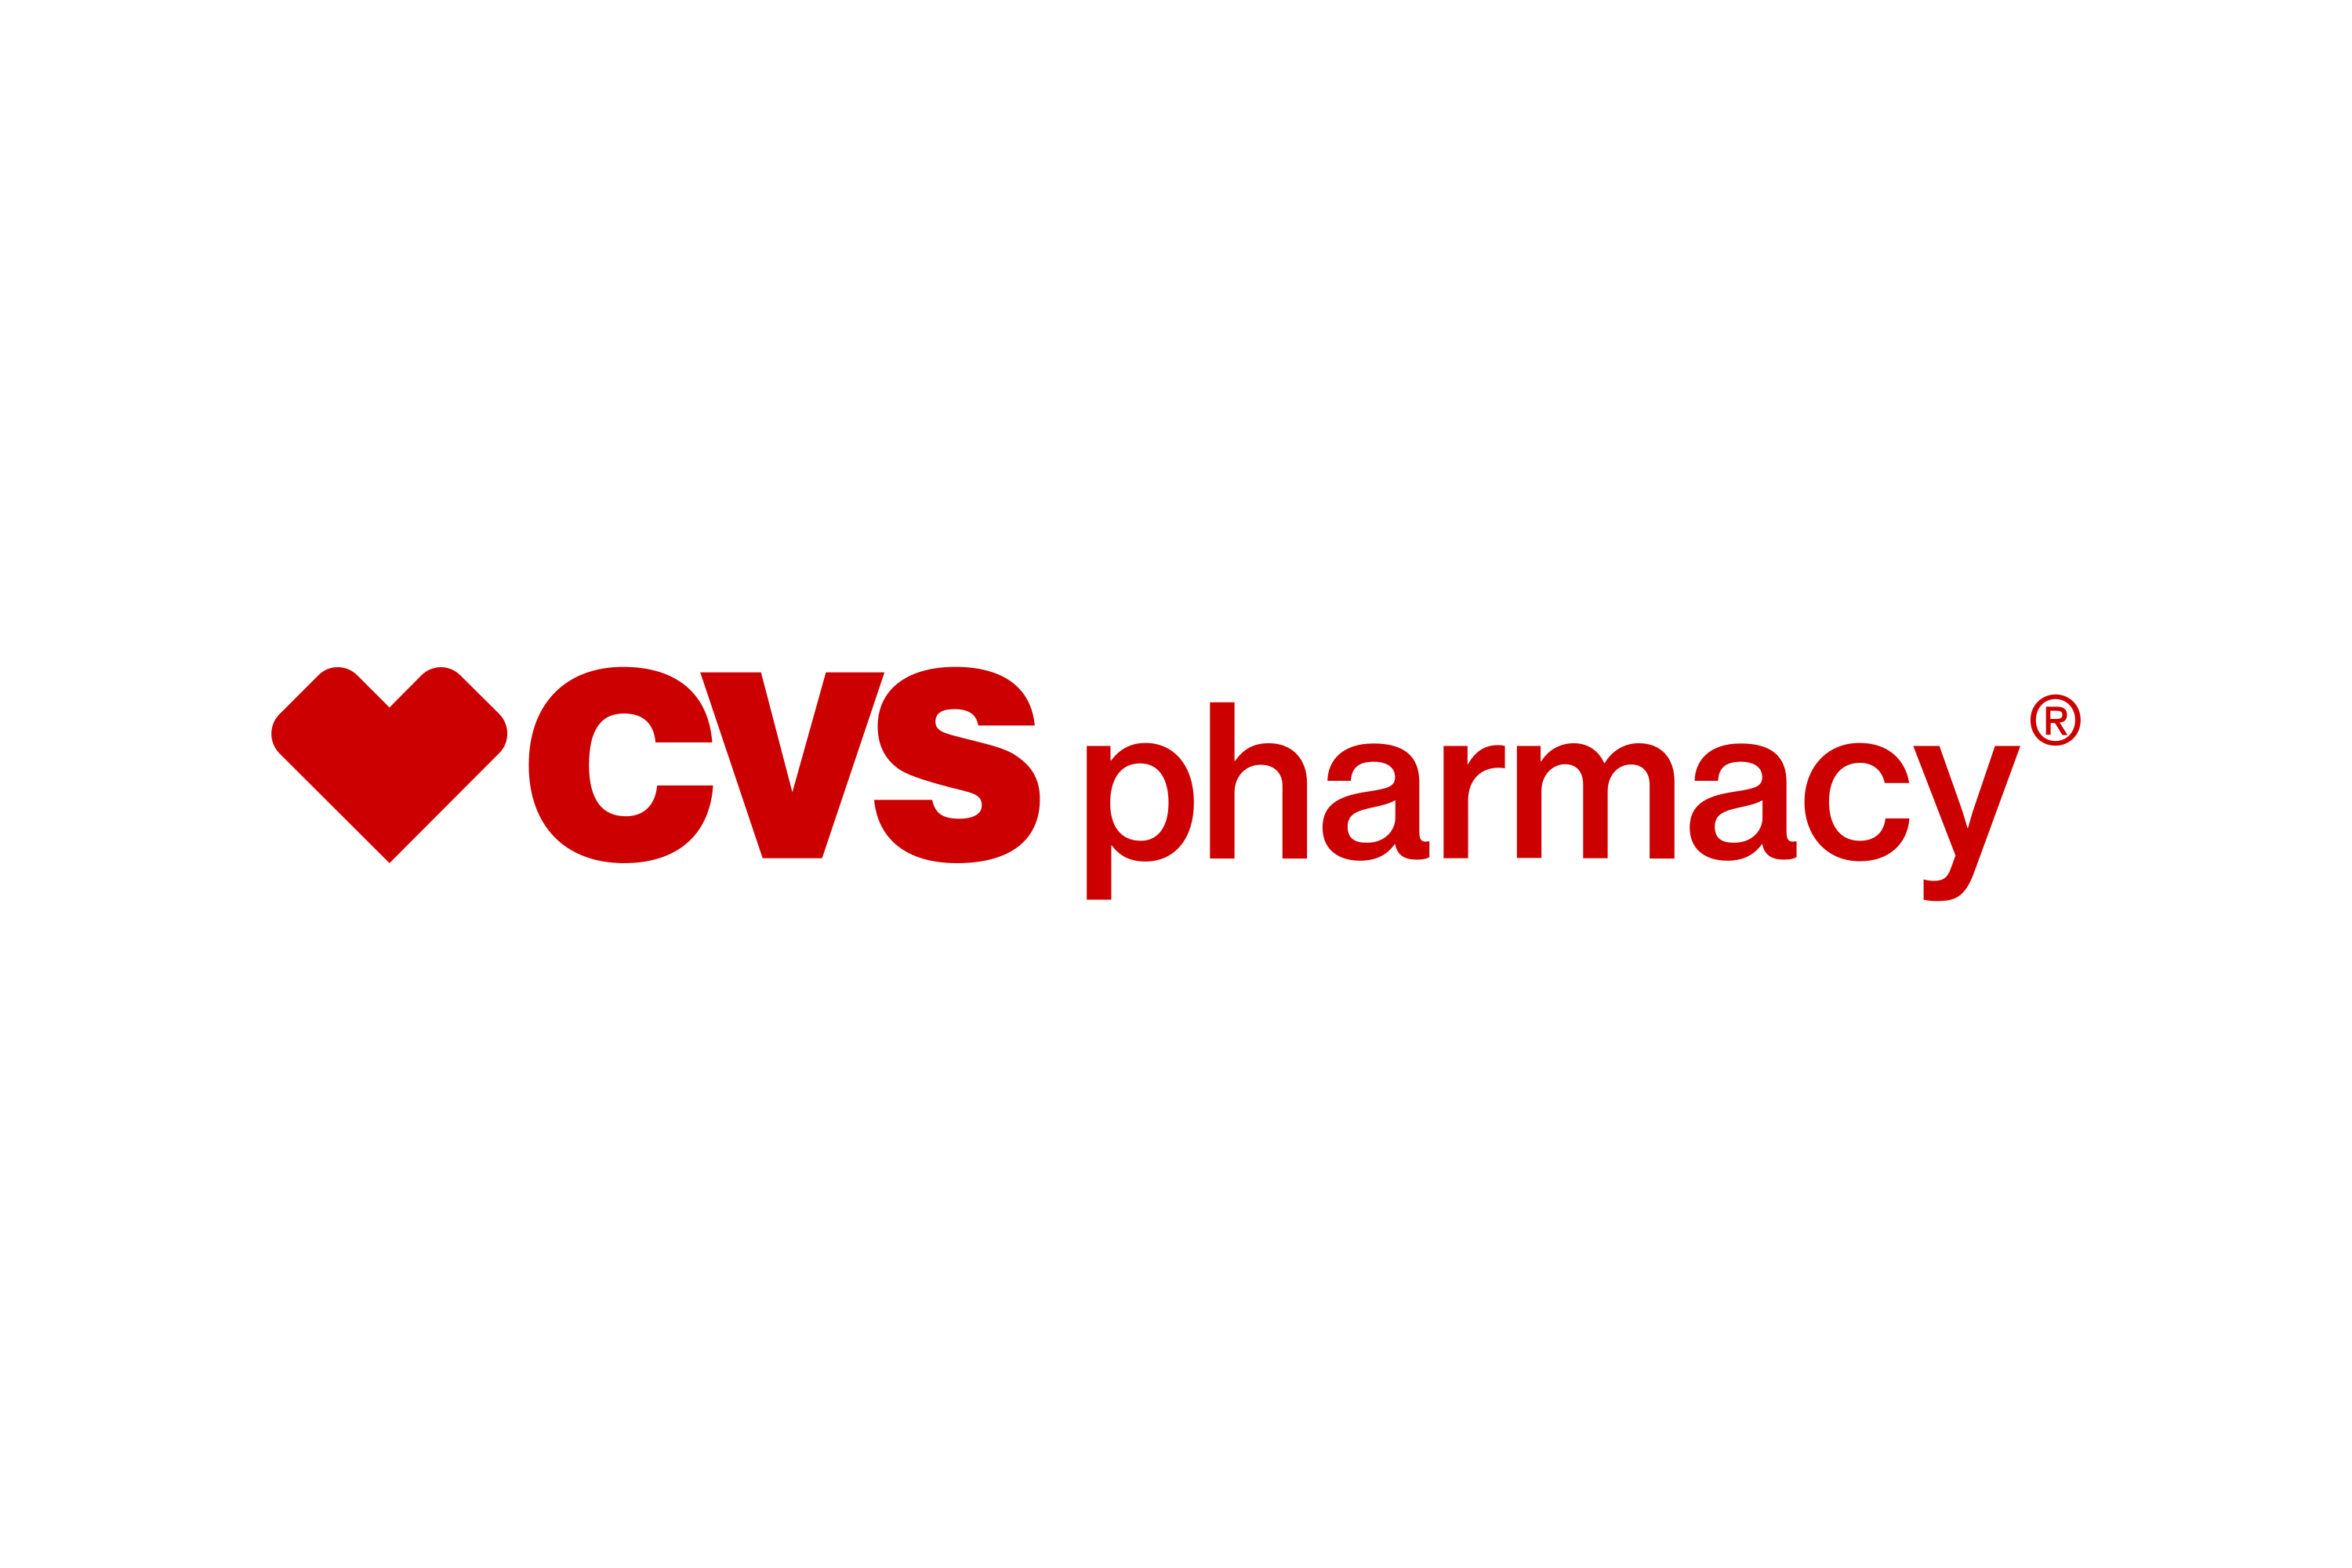 CVS pharmacy logo